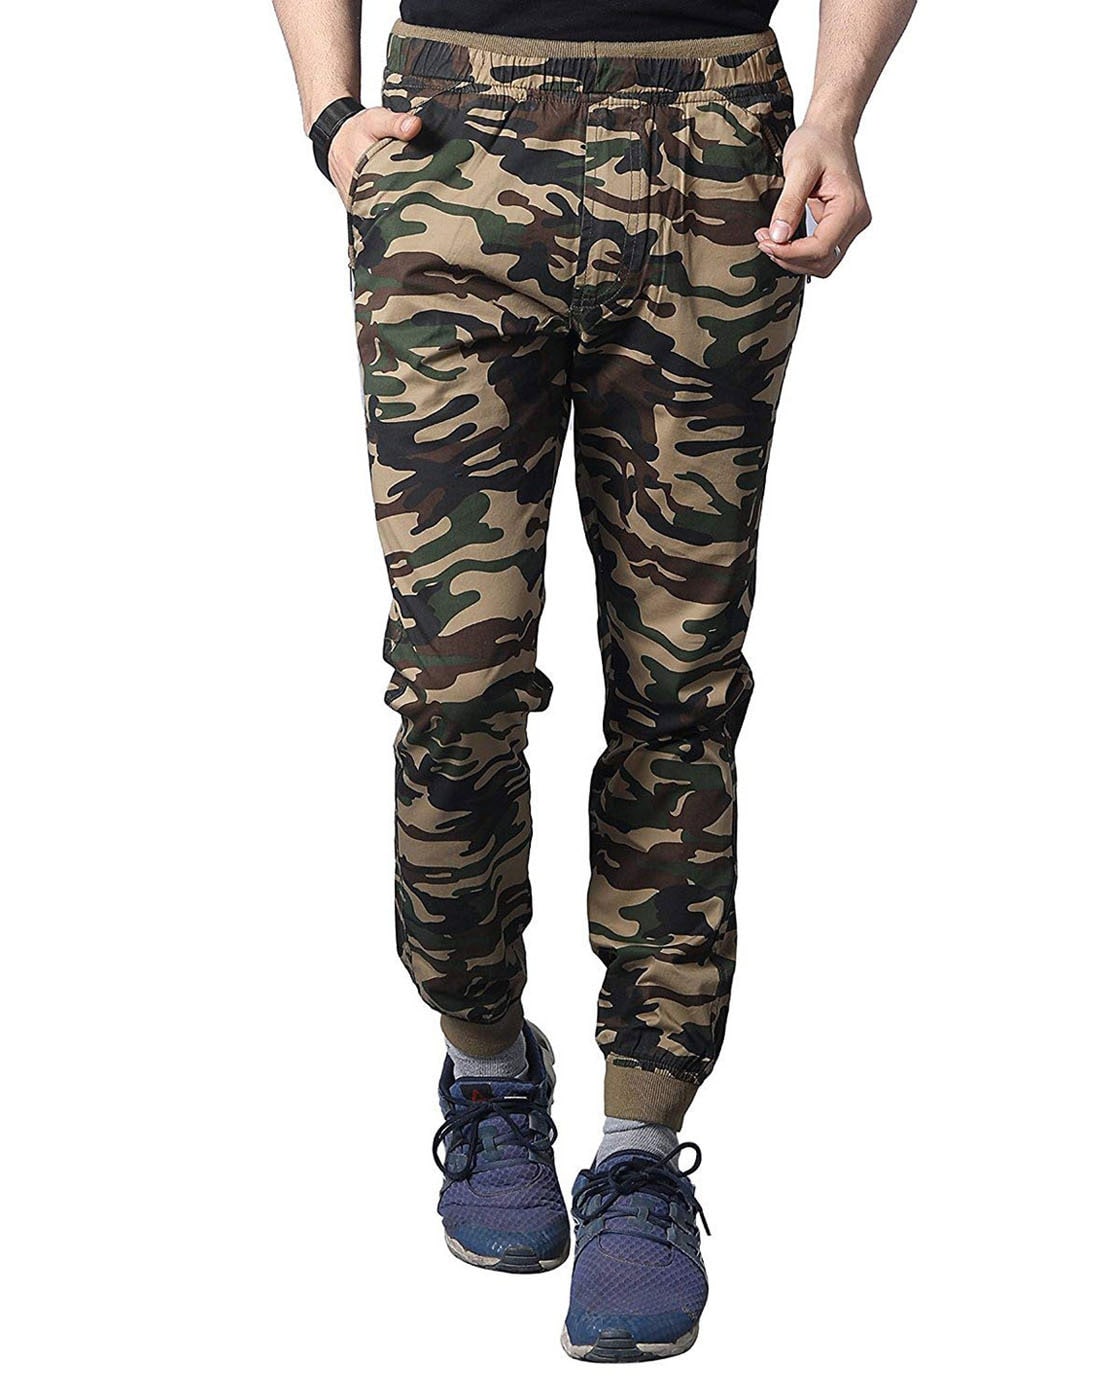 Leggings Depot JGA-Q654-N367-M Blush Hue Camouflage Print Jogger Pants  w/Pockets, Medium